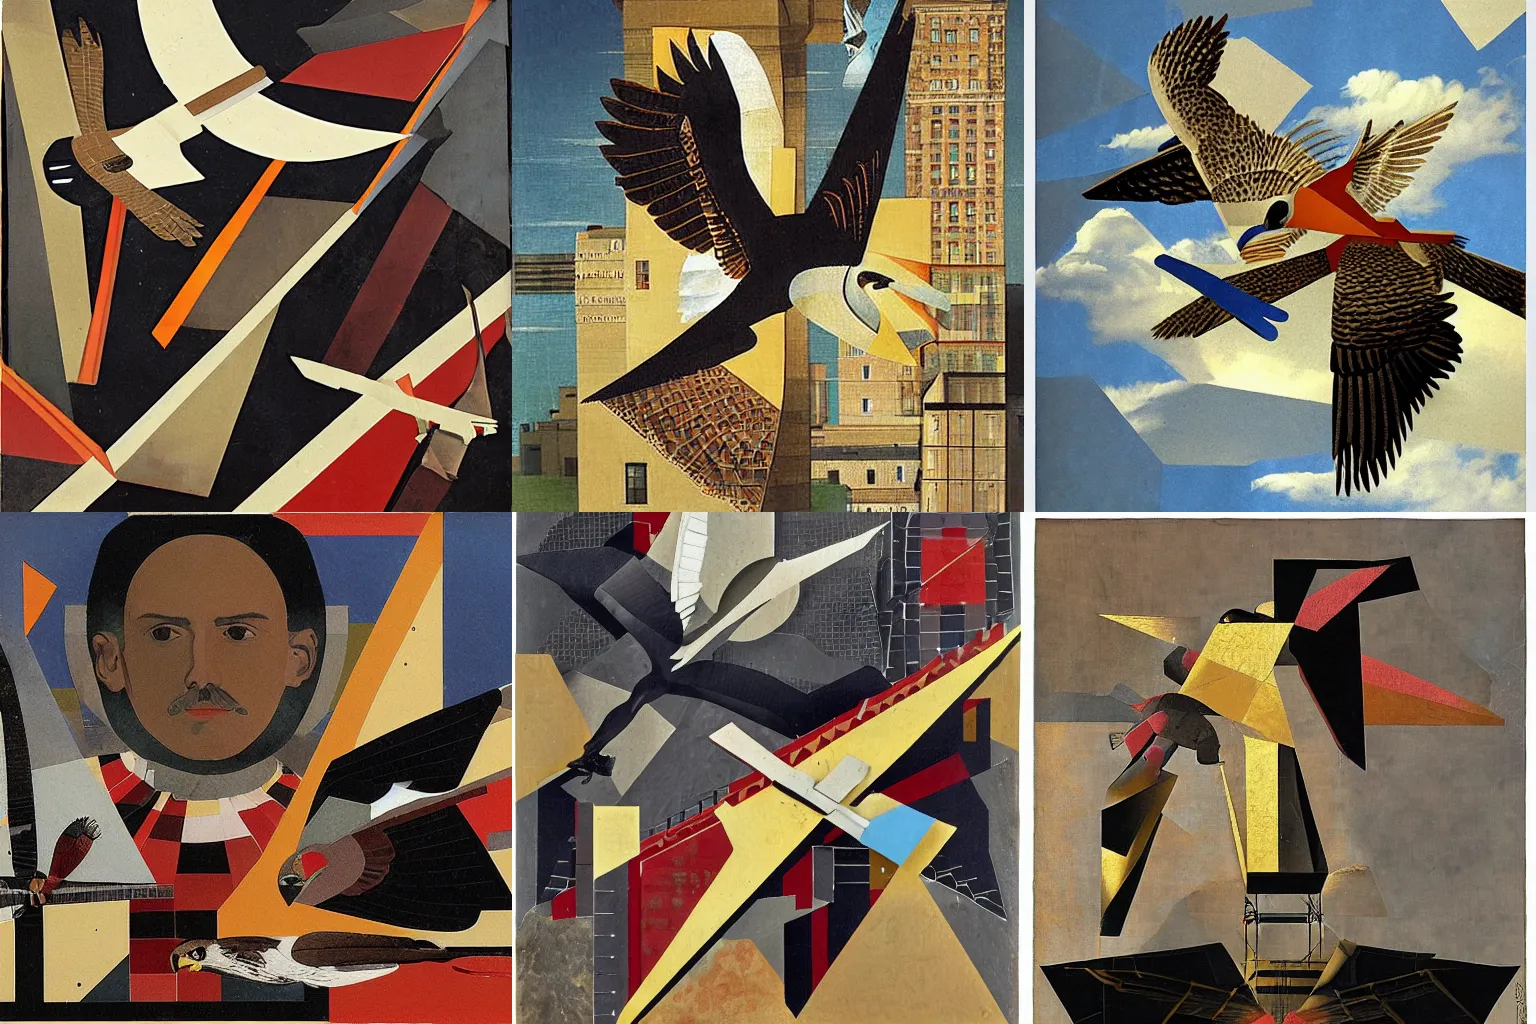 Prompt: the falcon flies, constructivist collage by diego velazquez